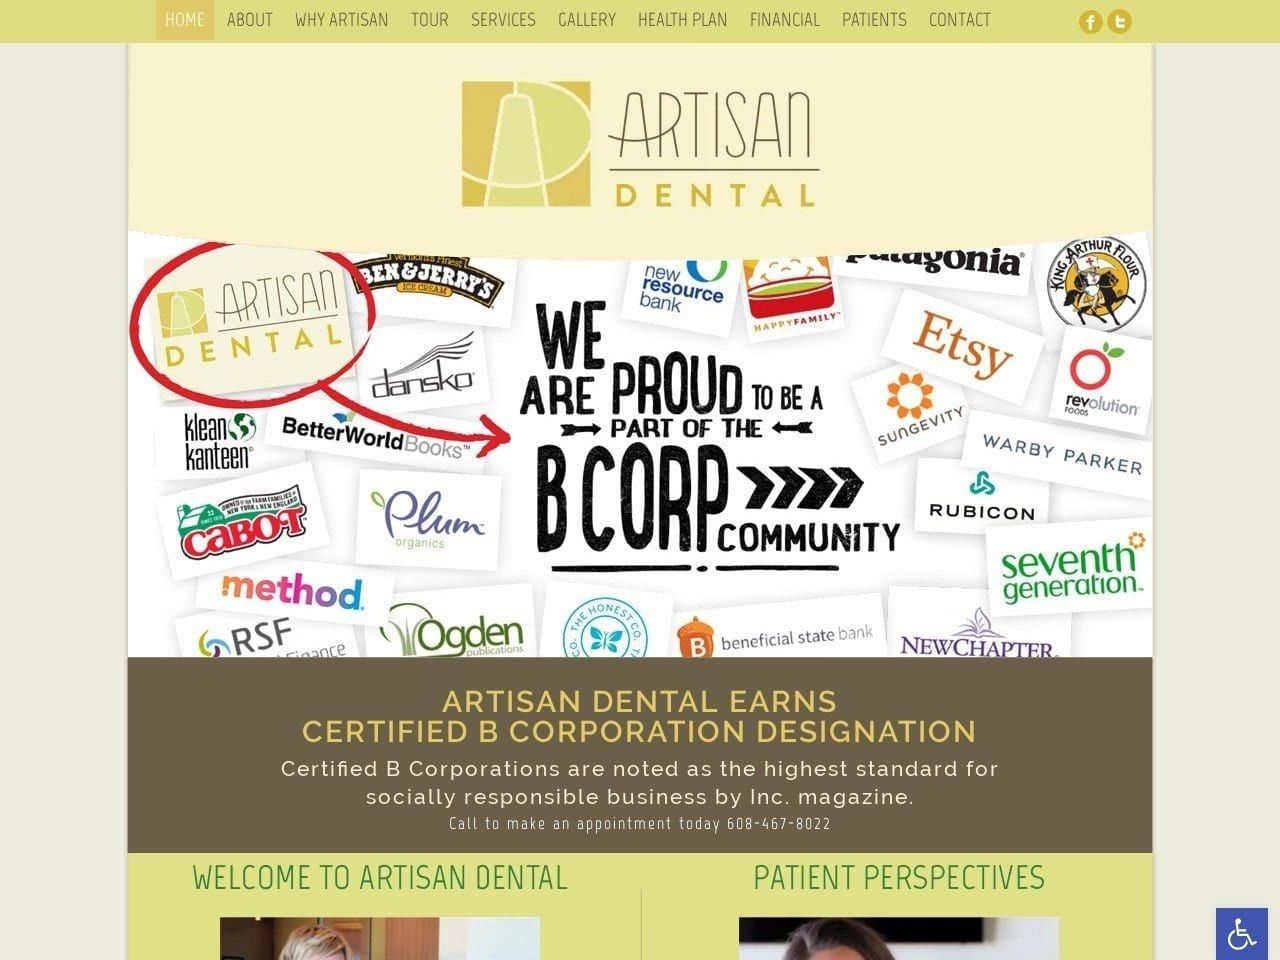 Artisan Dental LLC Website Screenshot from artisandentalmadison.com